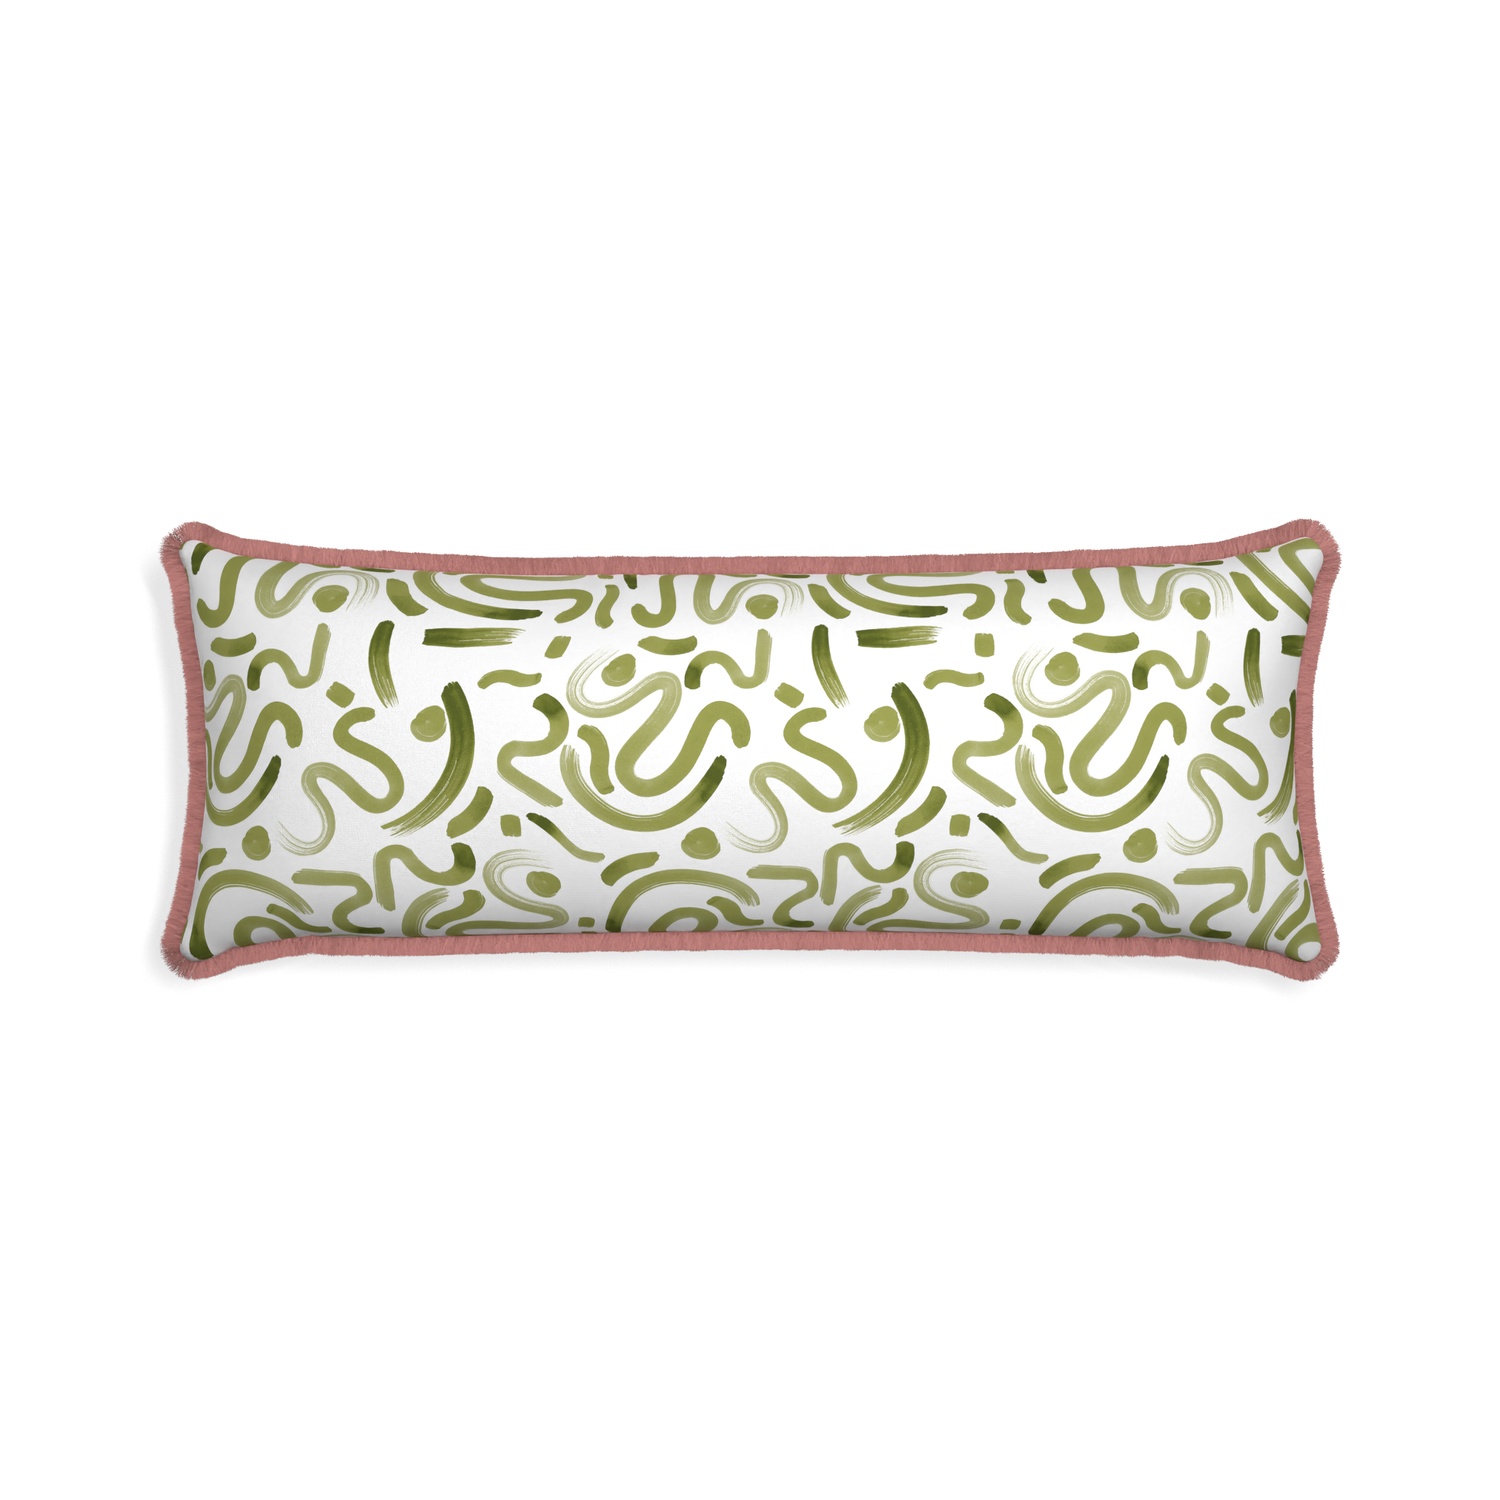 Xl-lumbar hockney moss custom pillow with d fringe on white background